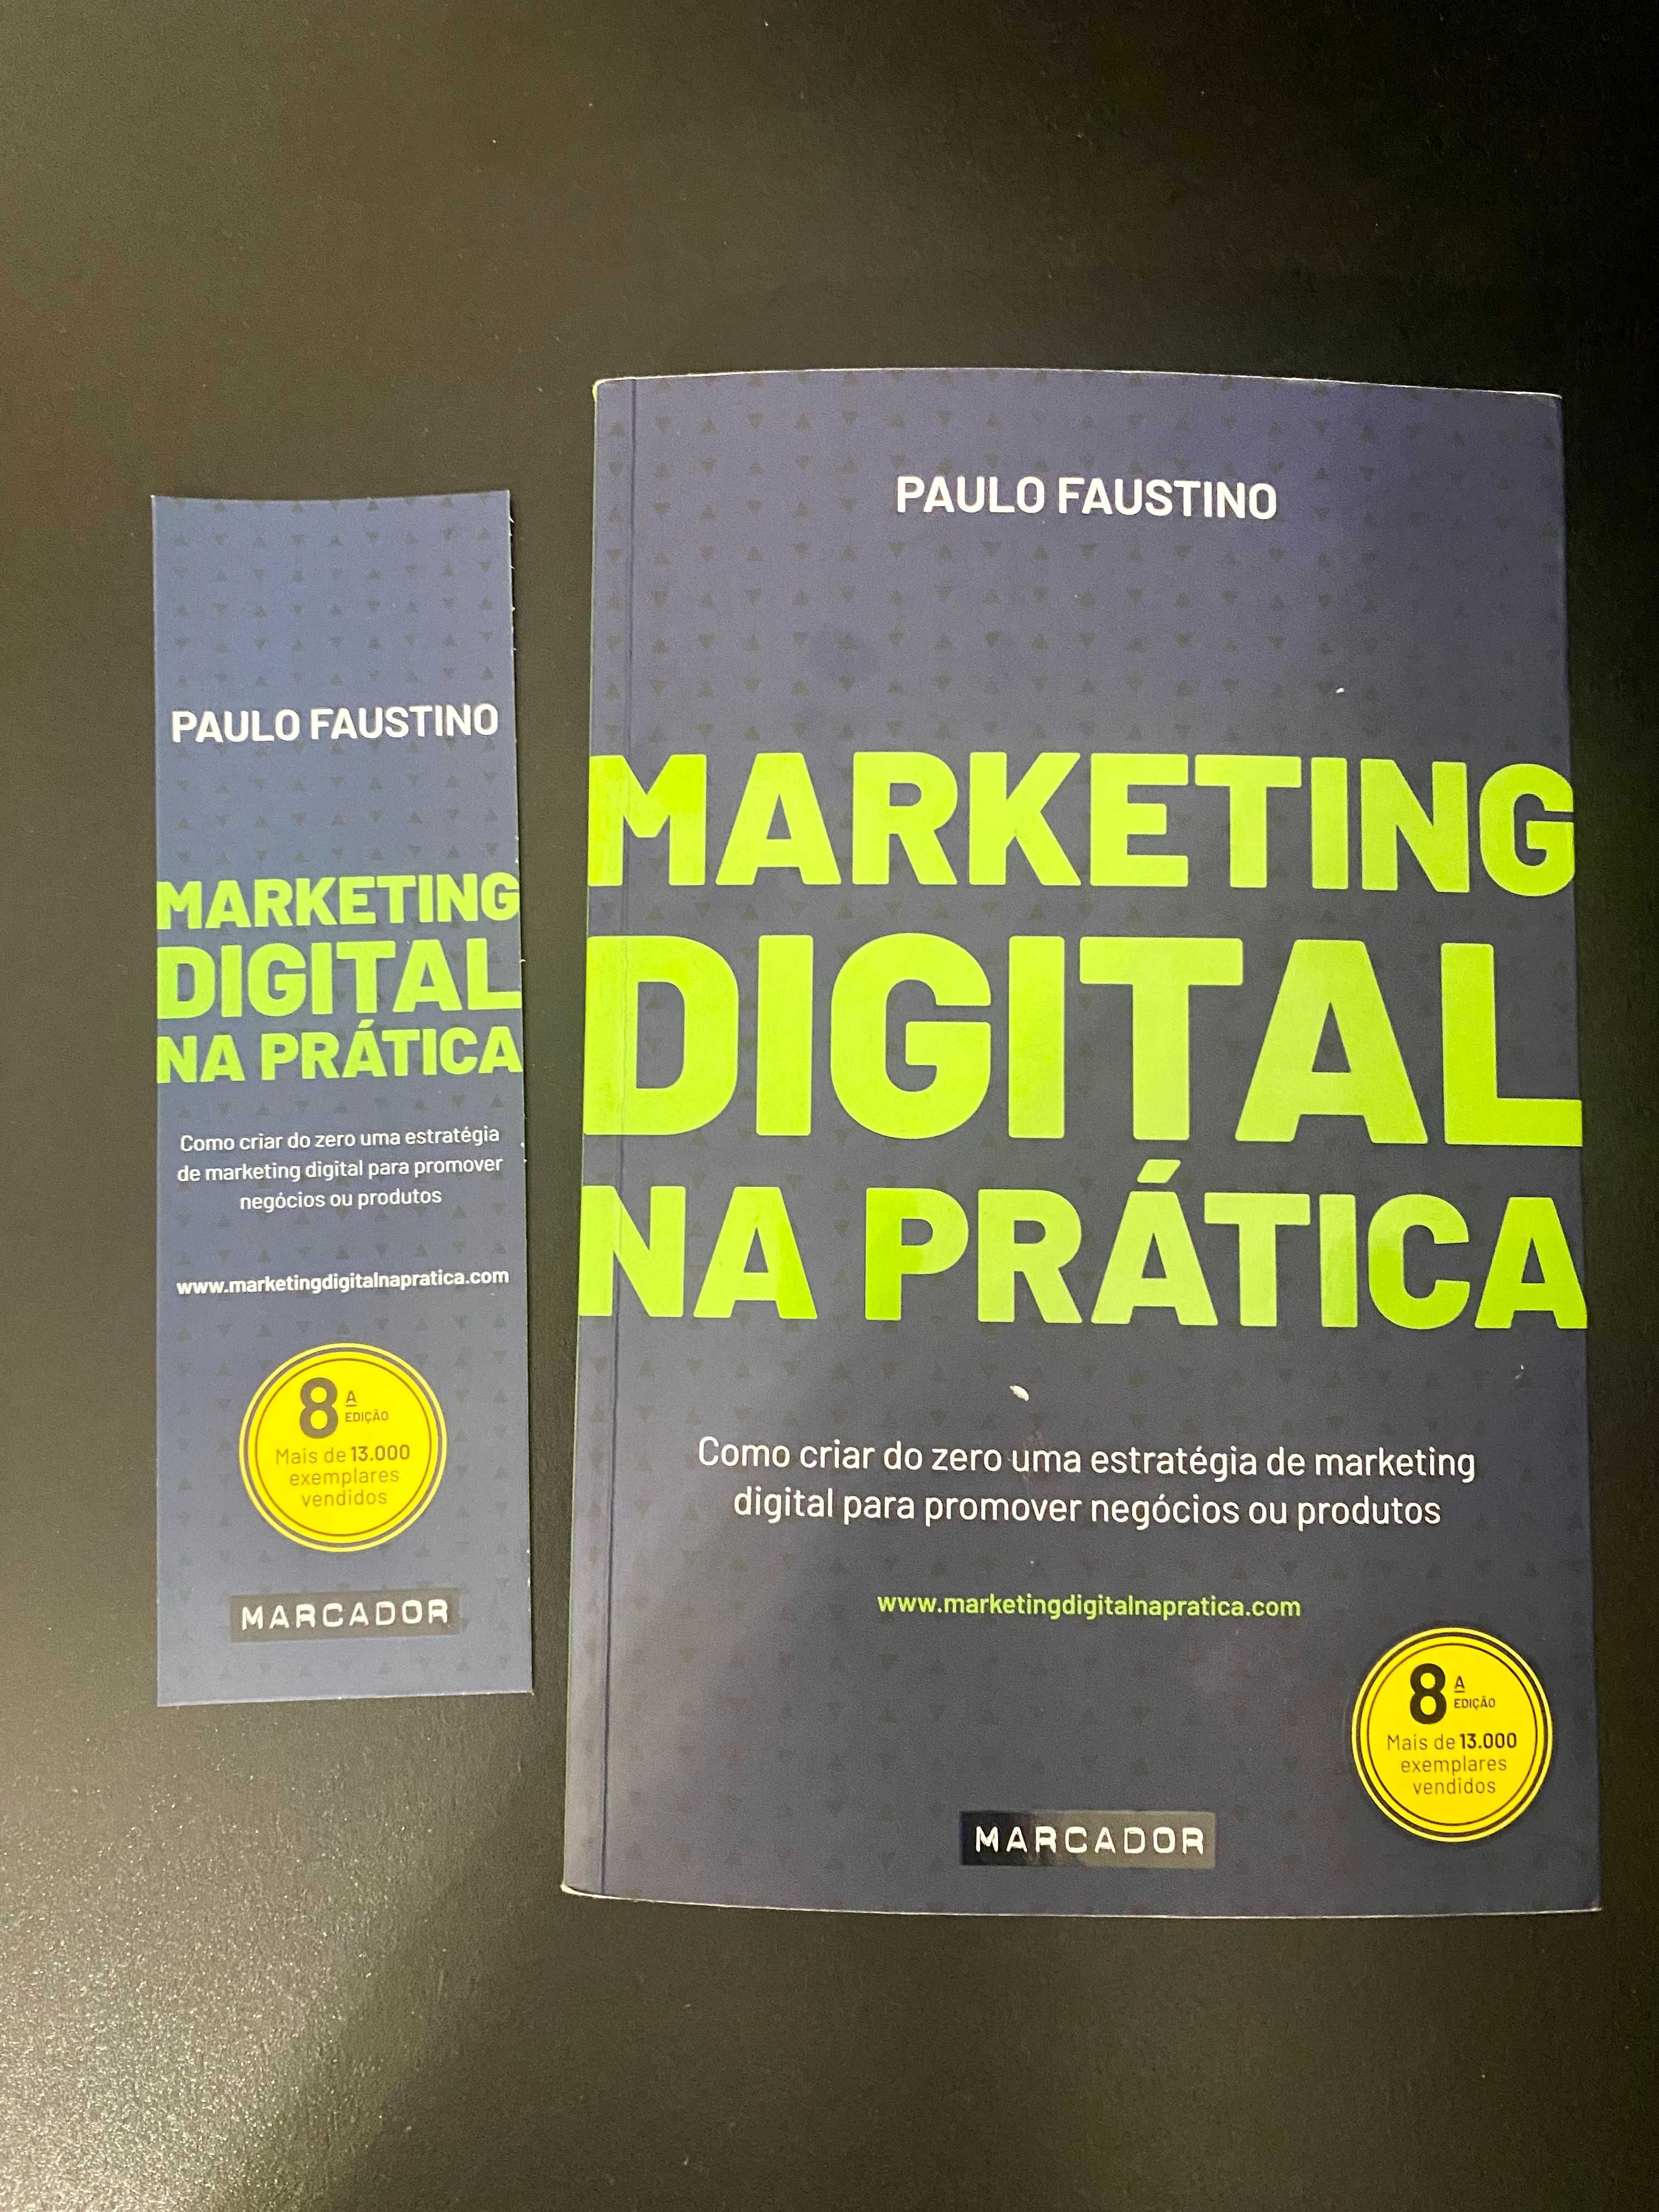 Livro Marketing Digital na Prática